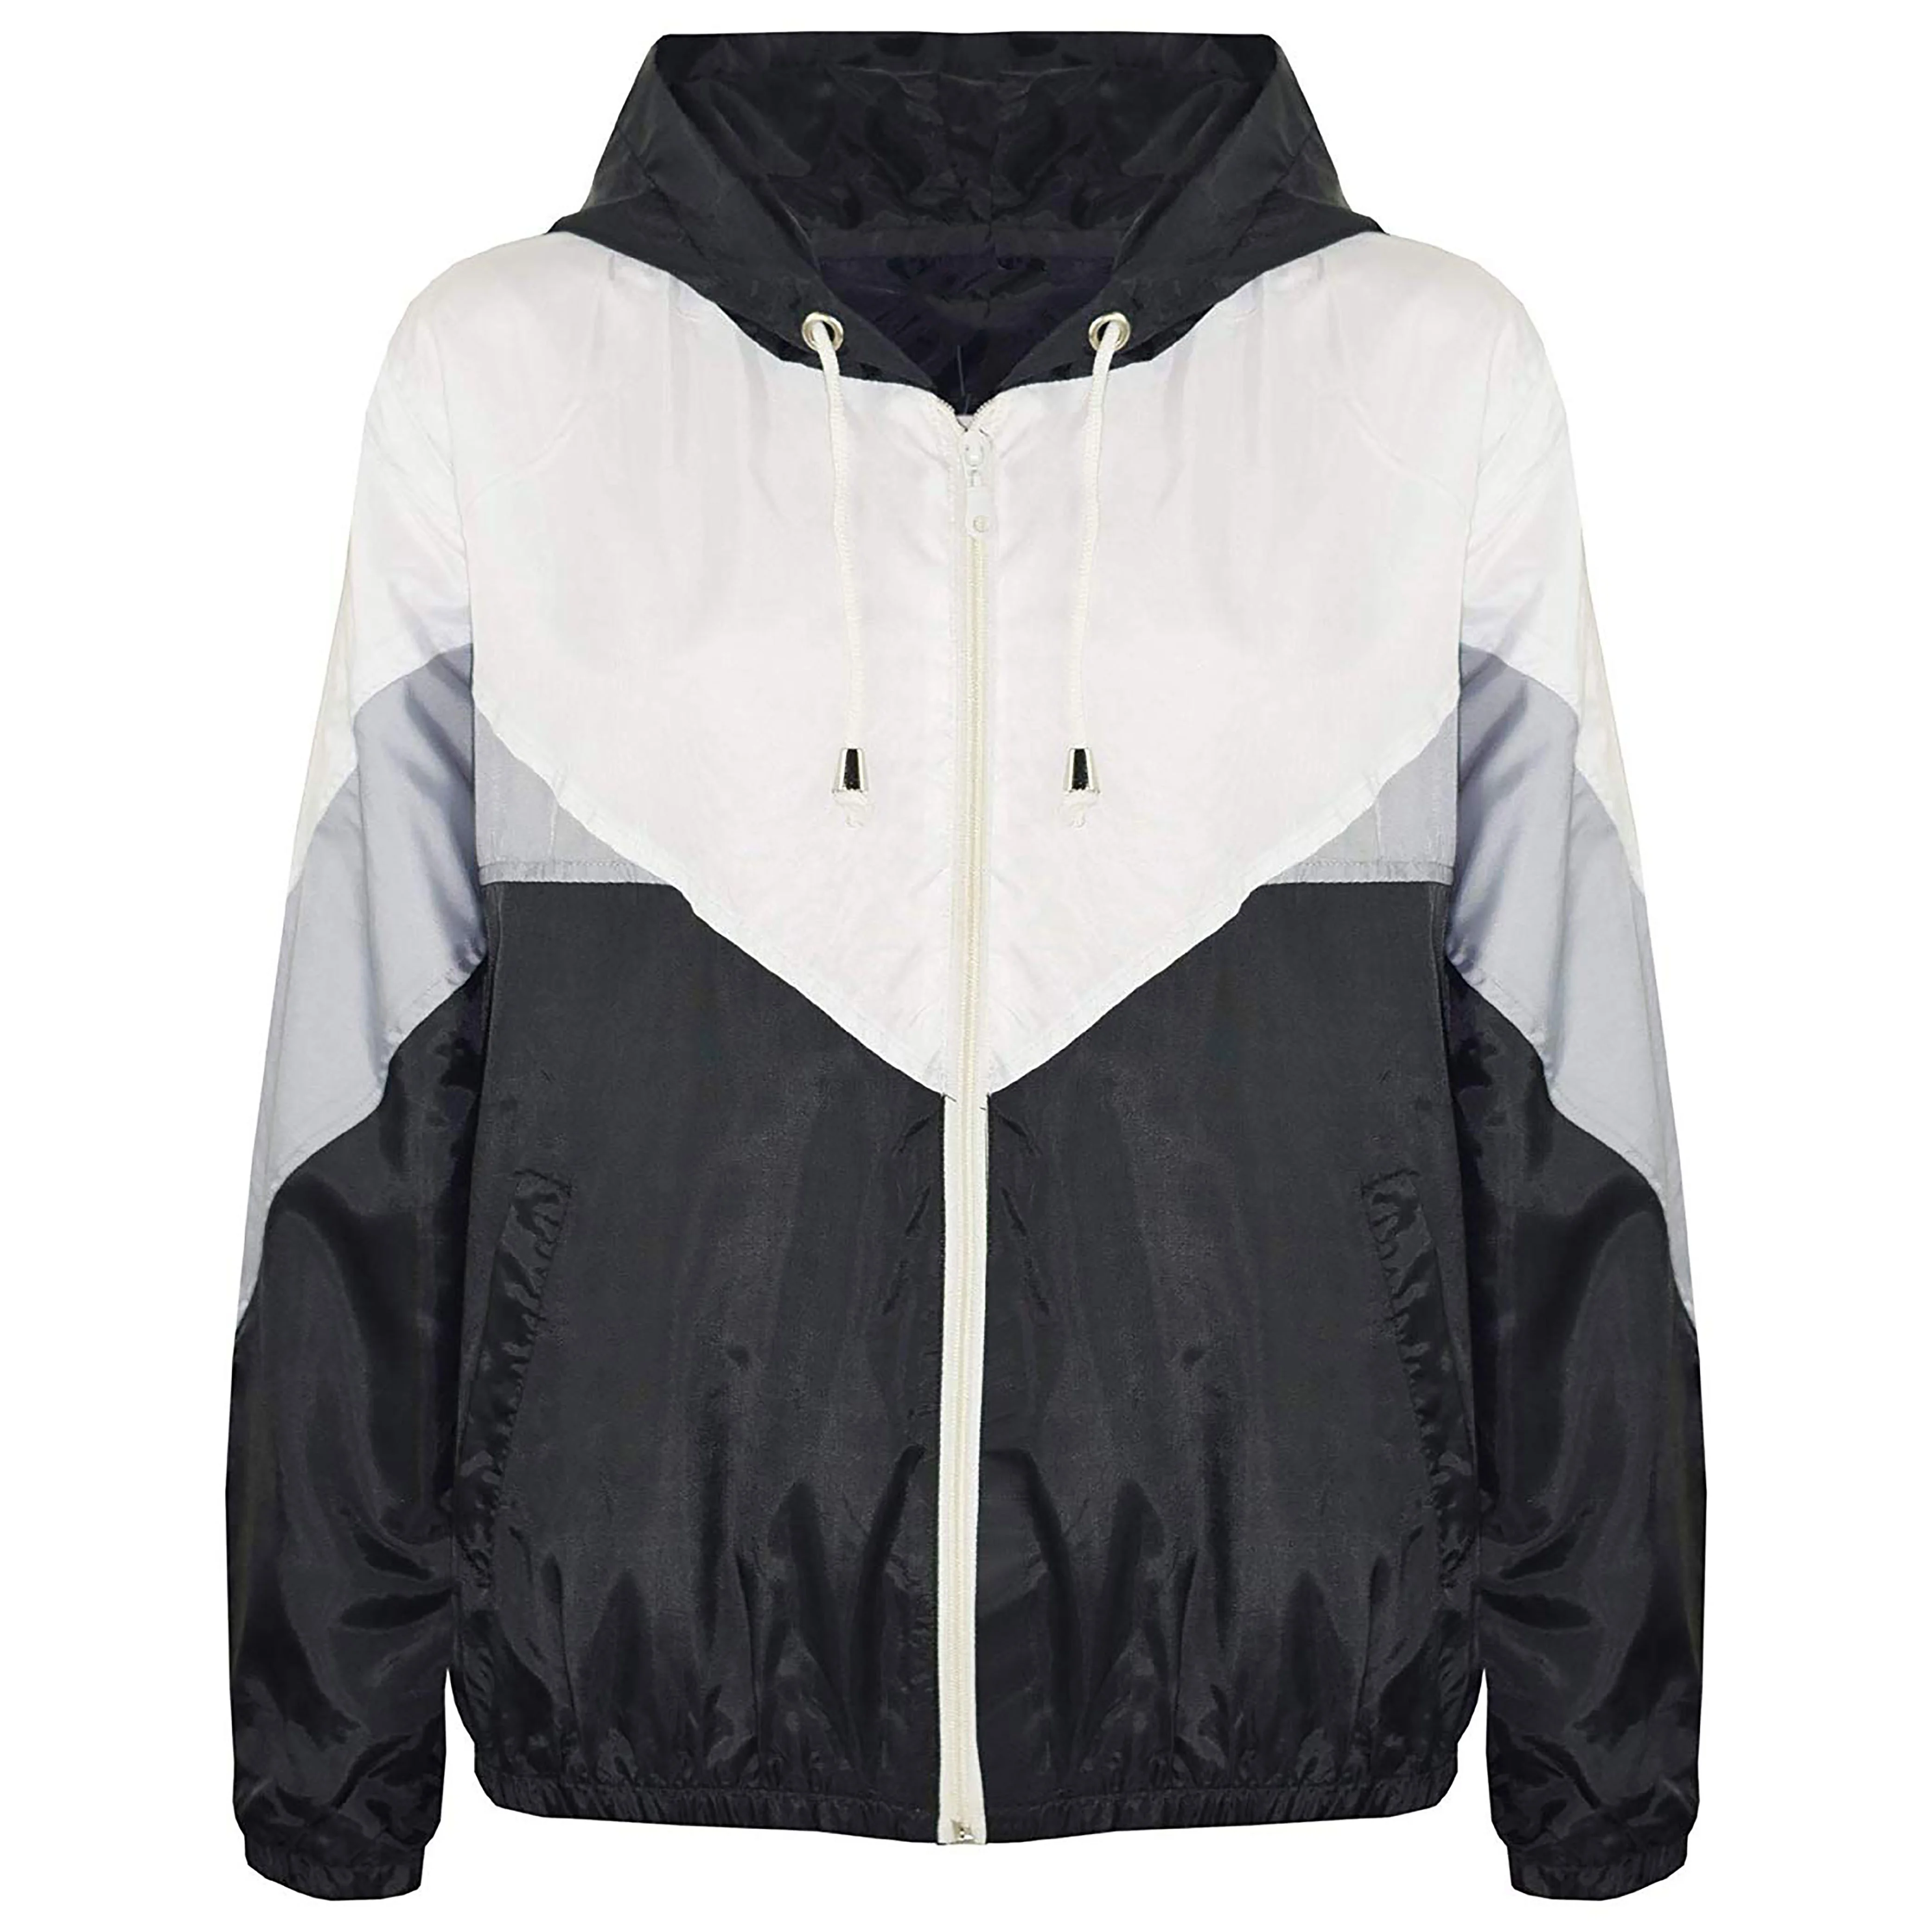 Style It Up Unisex Kids Boy Girl Waterproof Plain Raincoat Mac Kagoul Jacket Hooded Cagoul 